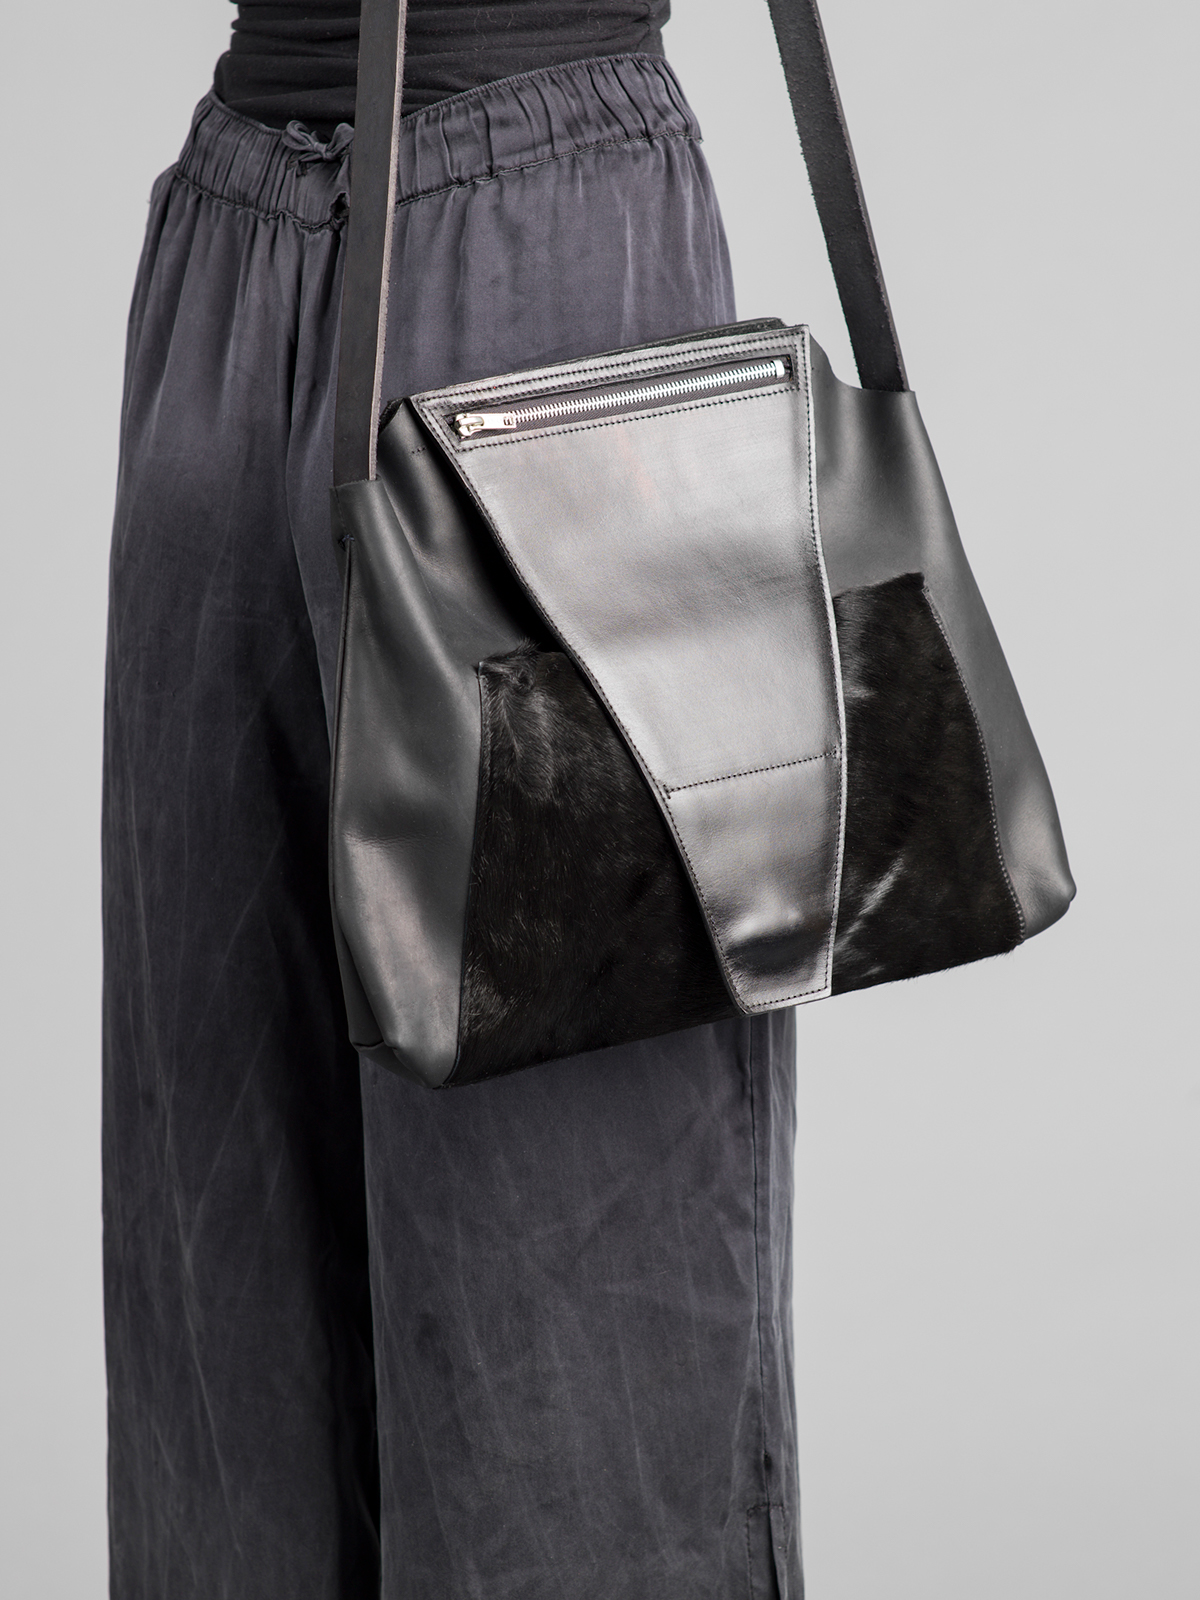 accessories handbag handbags skemongo Collaboration handmade leather